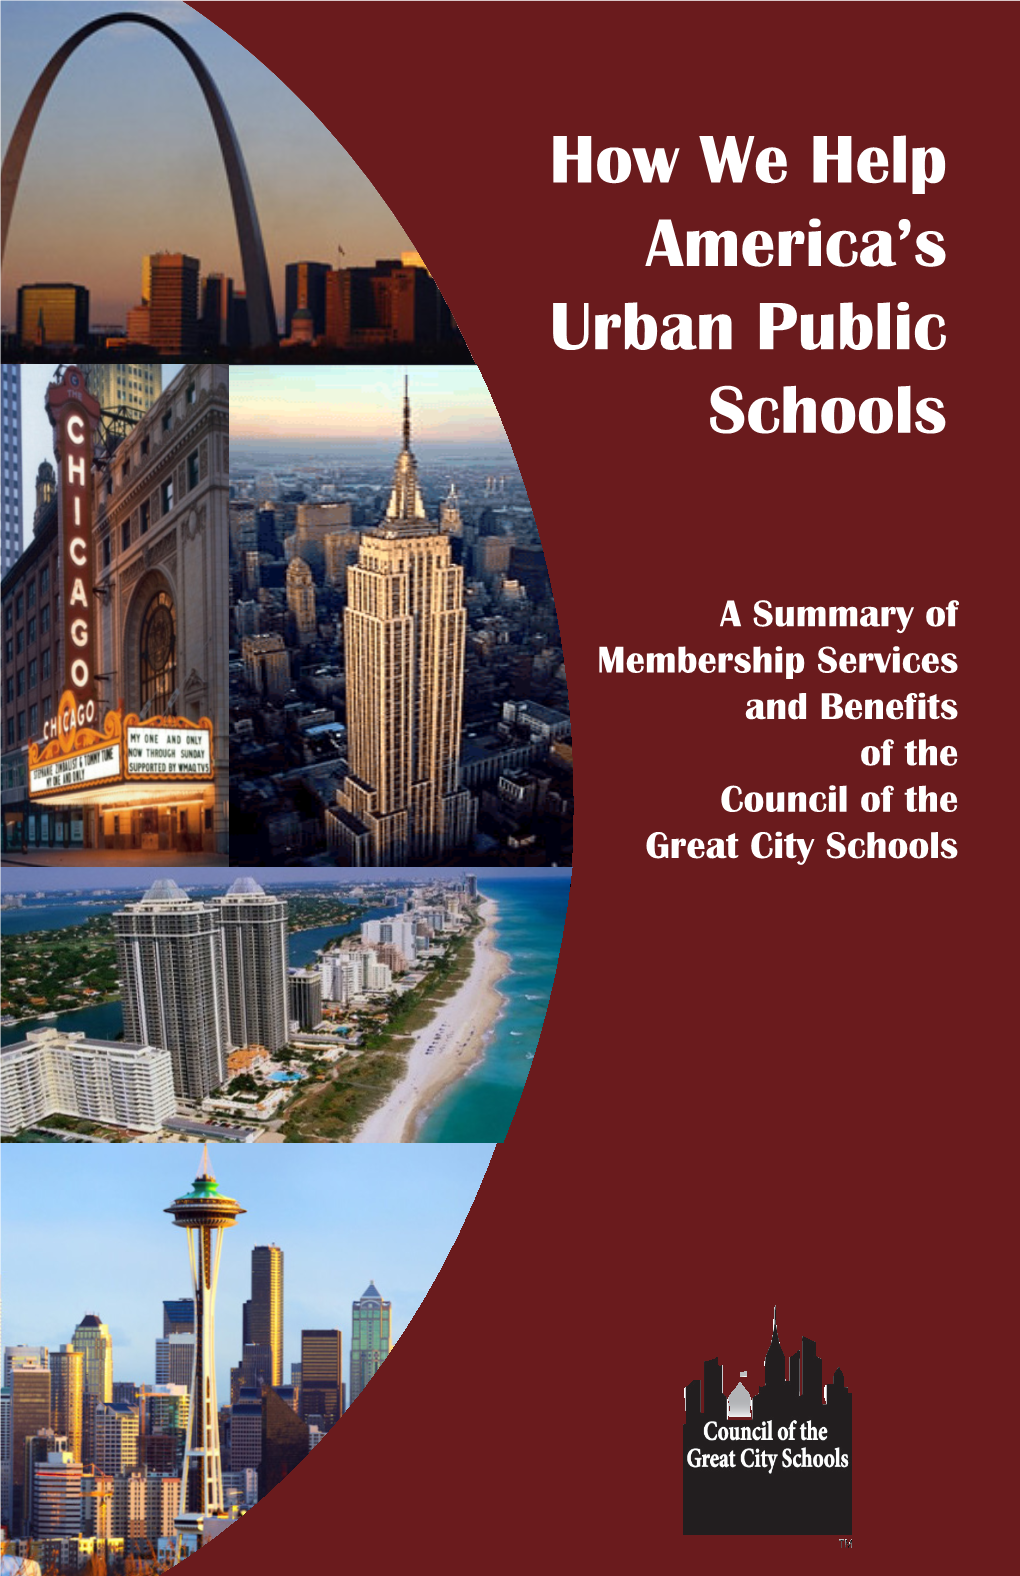 How We Help America's Urban Public Schools